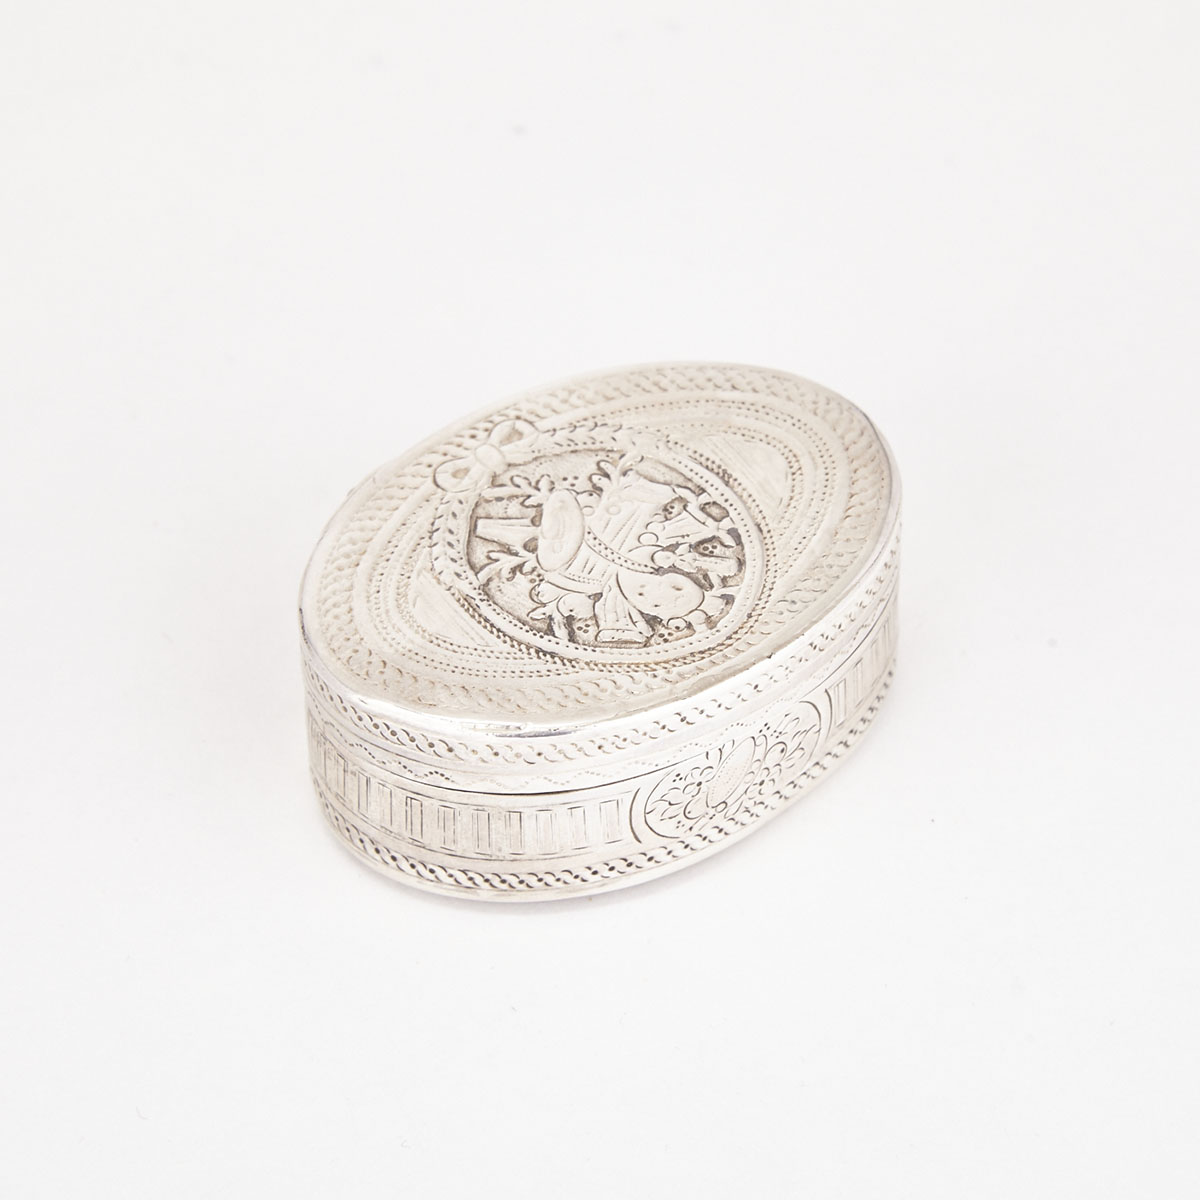 French Silver Oval Snuff Box, Paris, 1781-89